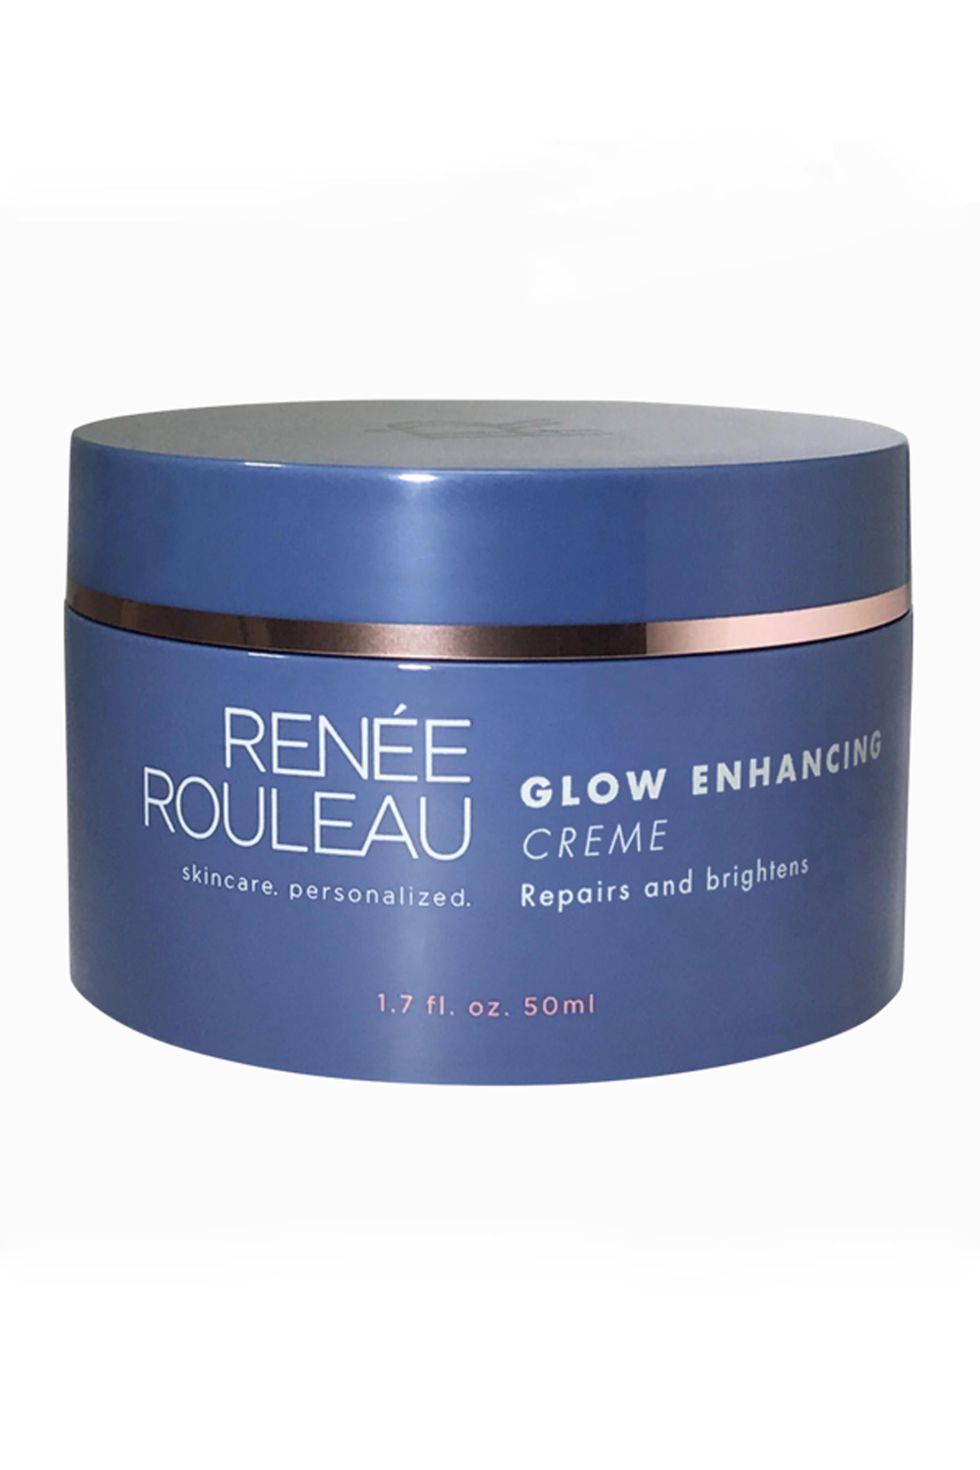 Renée Rouleau Glow Enhancing Creme